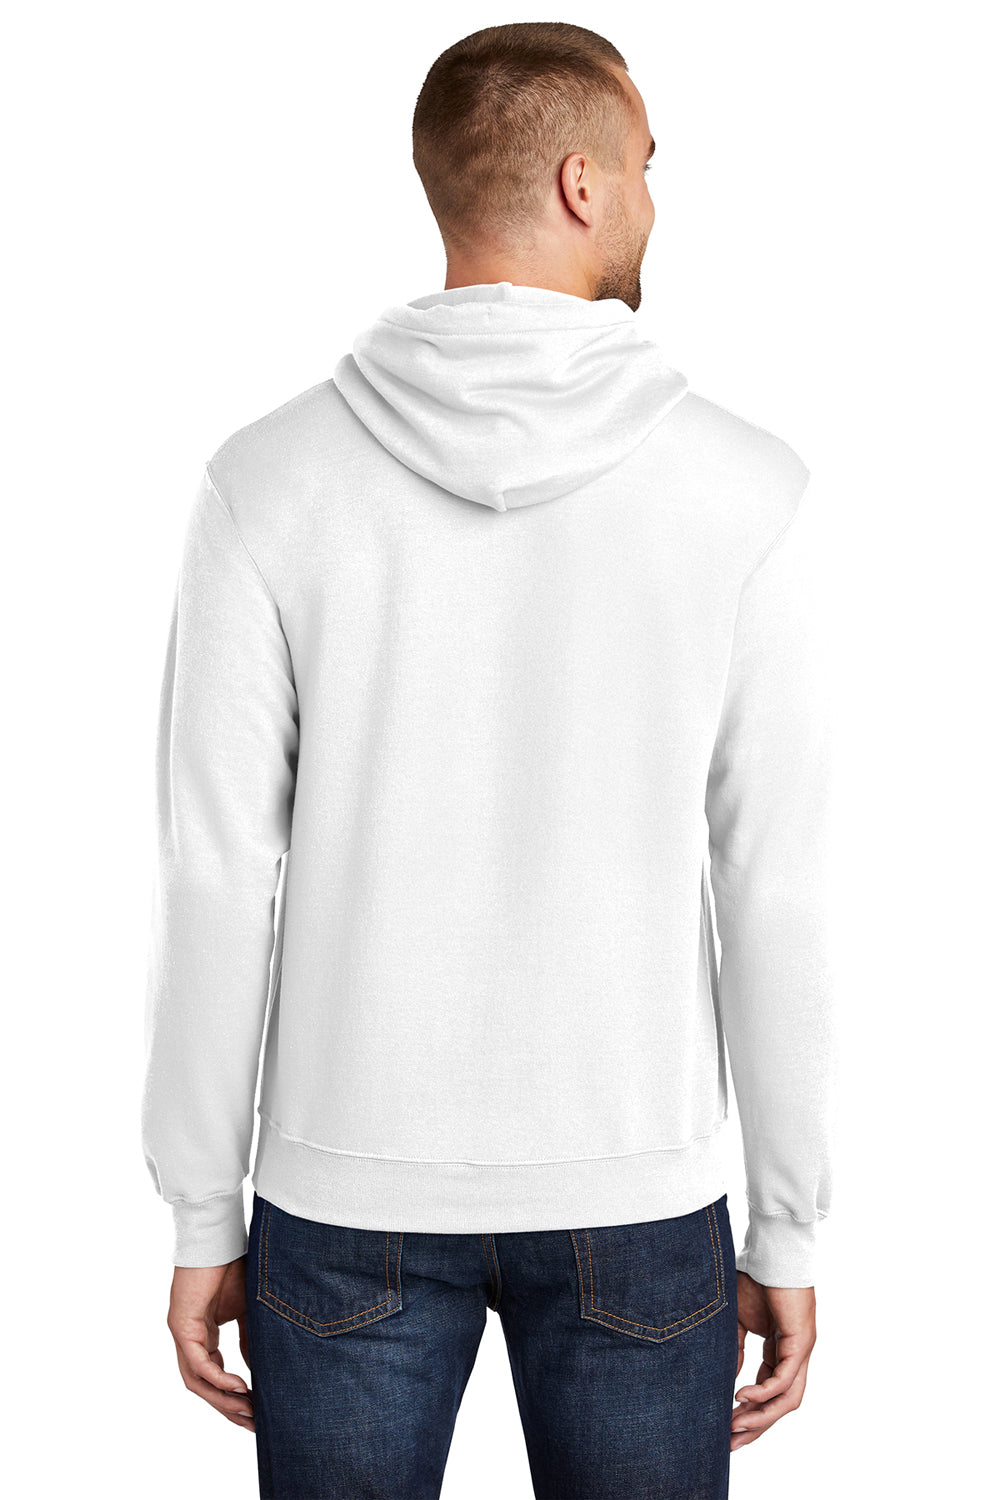 Port & Company PC78H Mens Core Fleece Hooded Sweatshirt Hoodie White Back